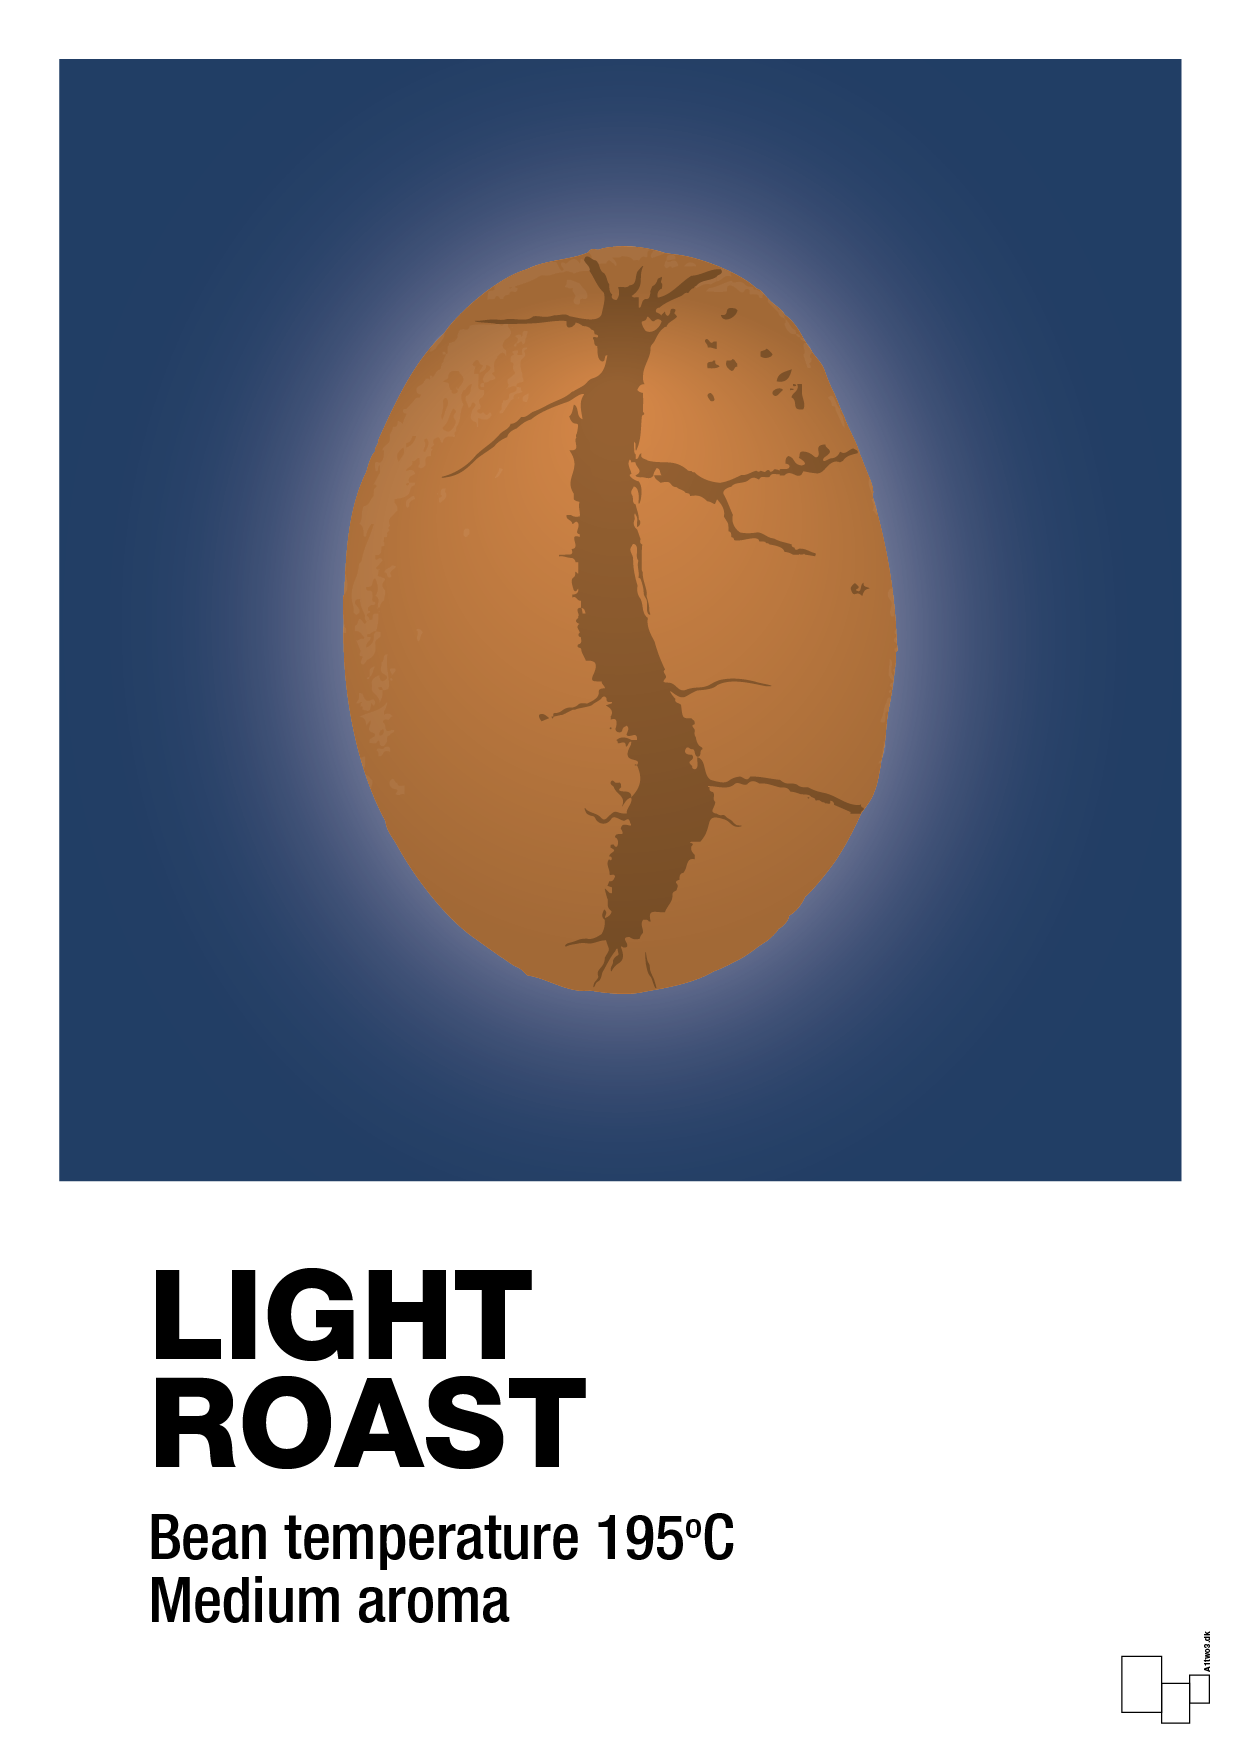 light roast - Plakat med Mad & Drikke i Lapis Blue